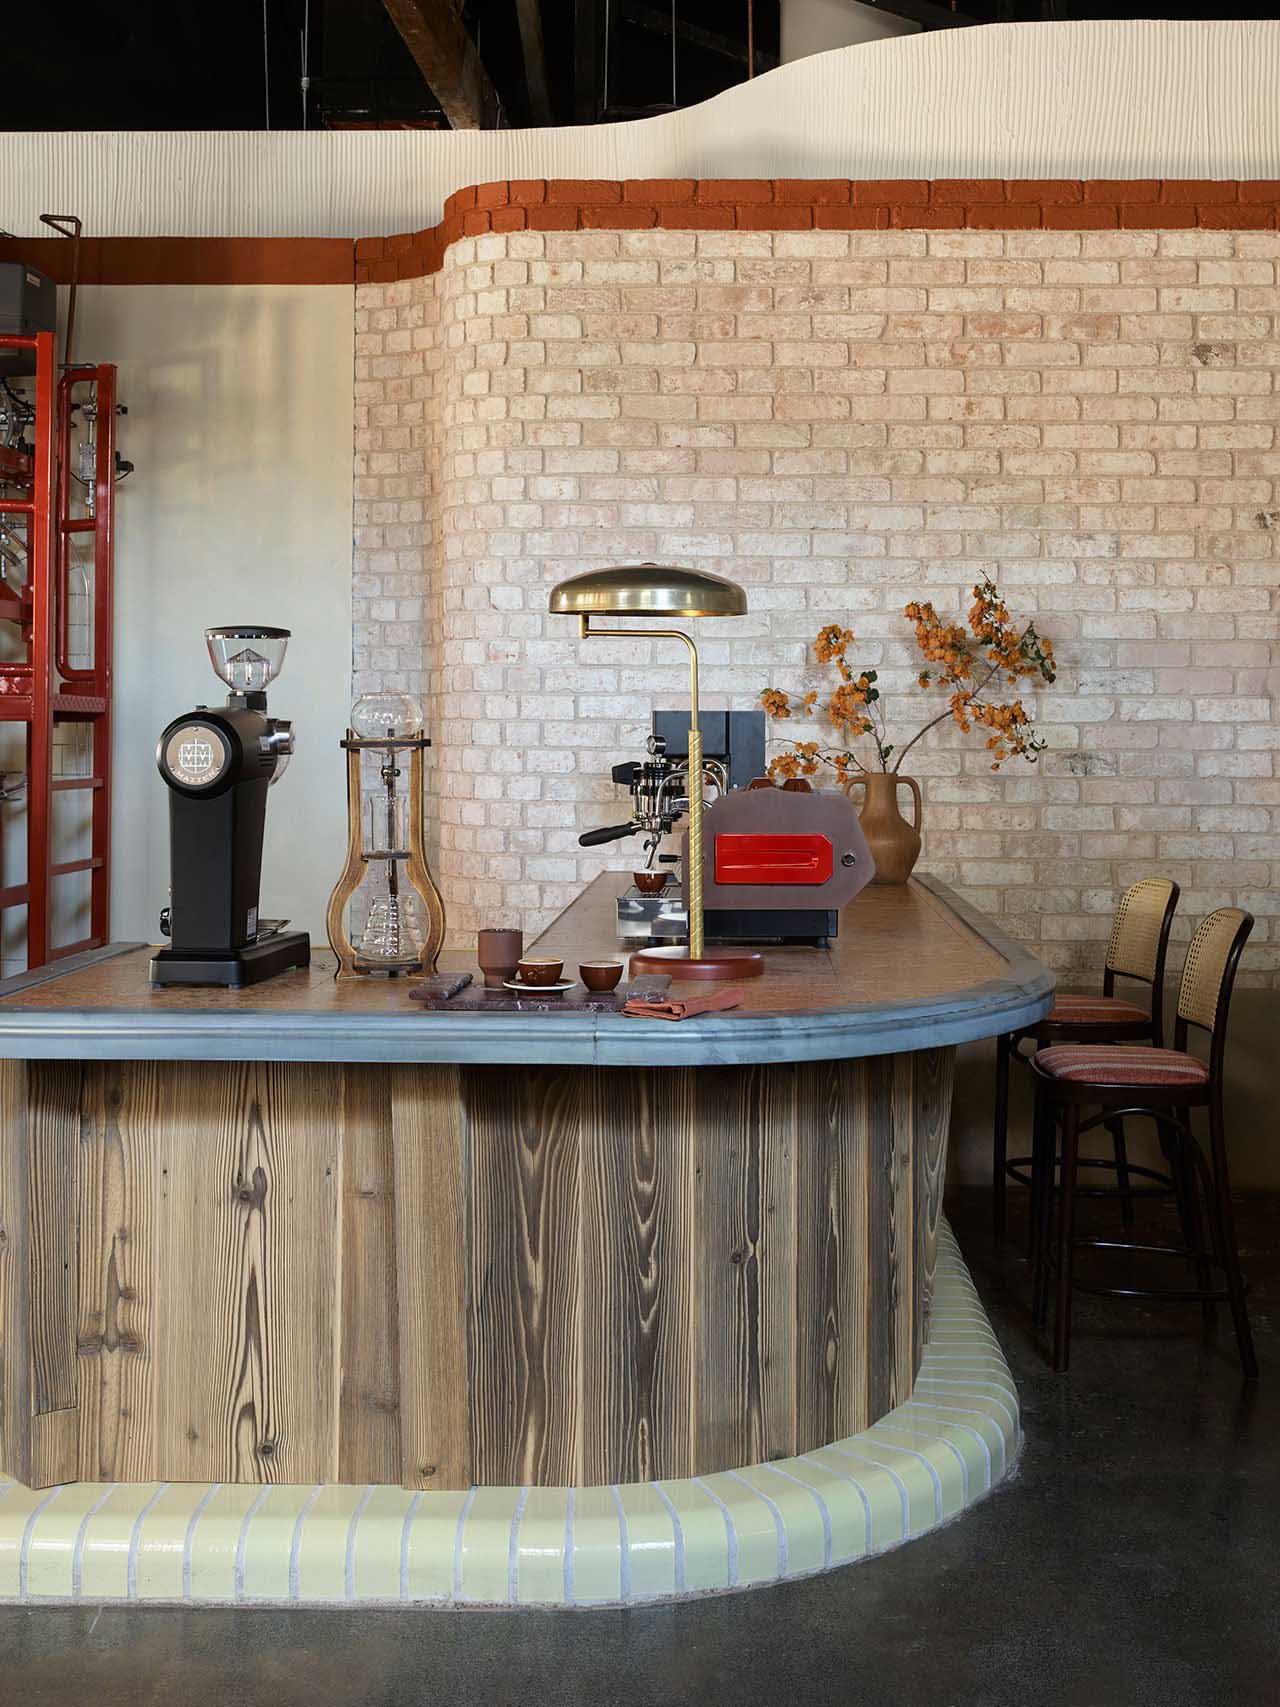 ALEXANDER & CO.,咖啡厅设计案例,GENOVESE COFFEE HOUSE,国外咖啡厅设计,300㎡,咖啡厅设计,GENOVESE COFFEE,意式咖啡,悉尼,仓库改造